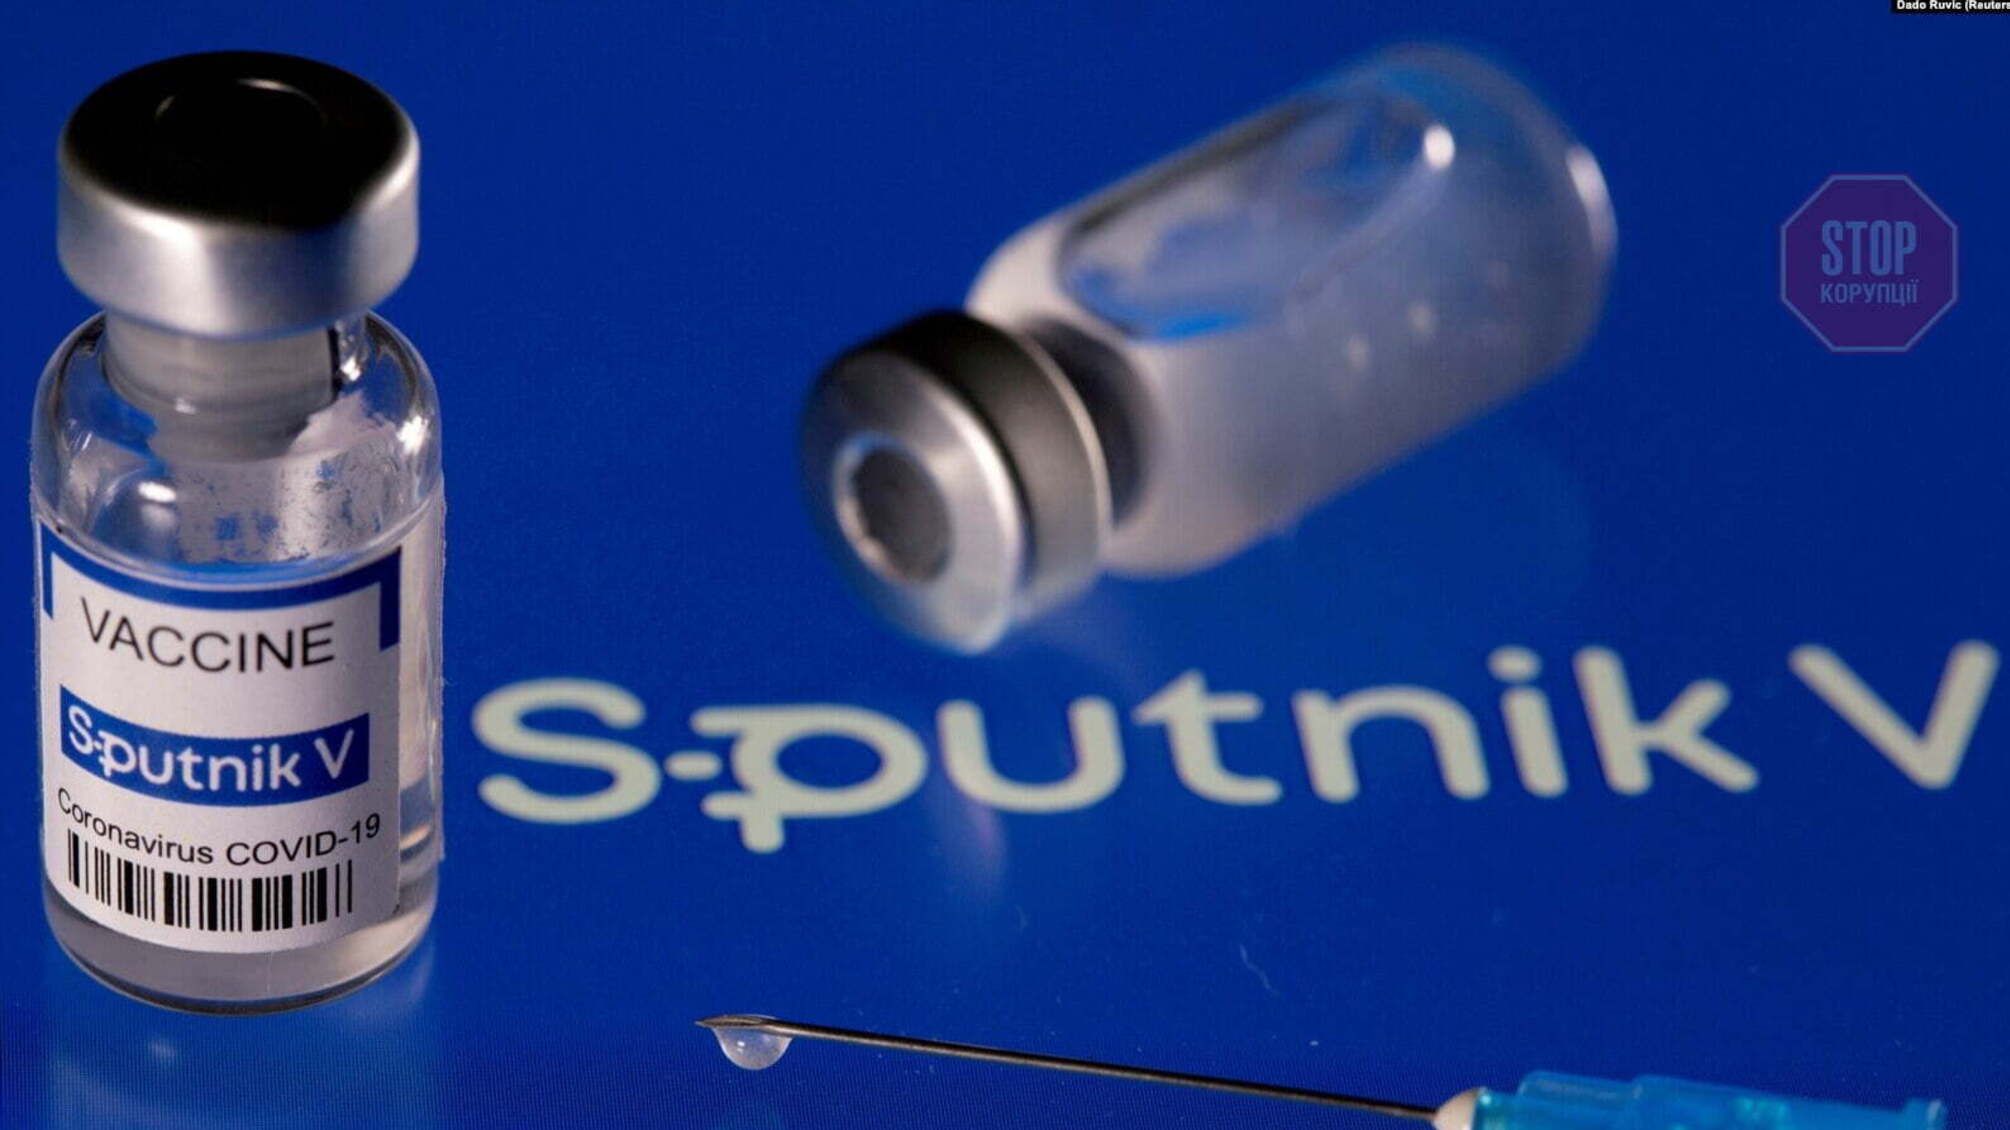 ВООЗ перевірила завод з виробництва вакцини Sputnik V: виявили проблеми